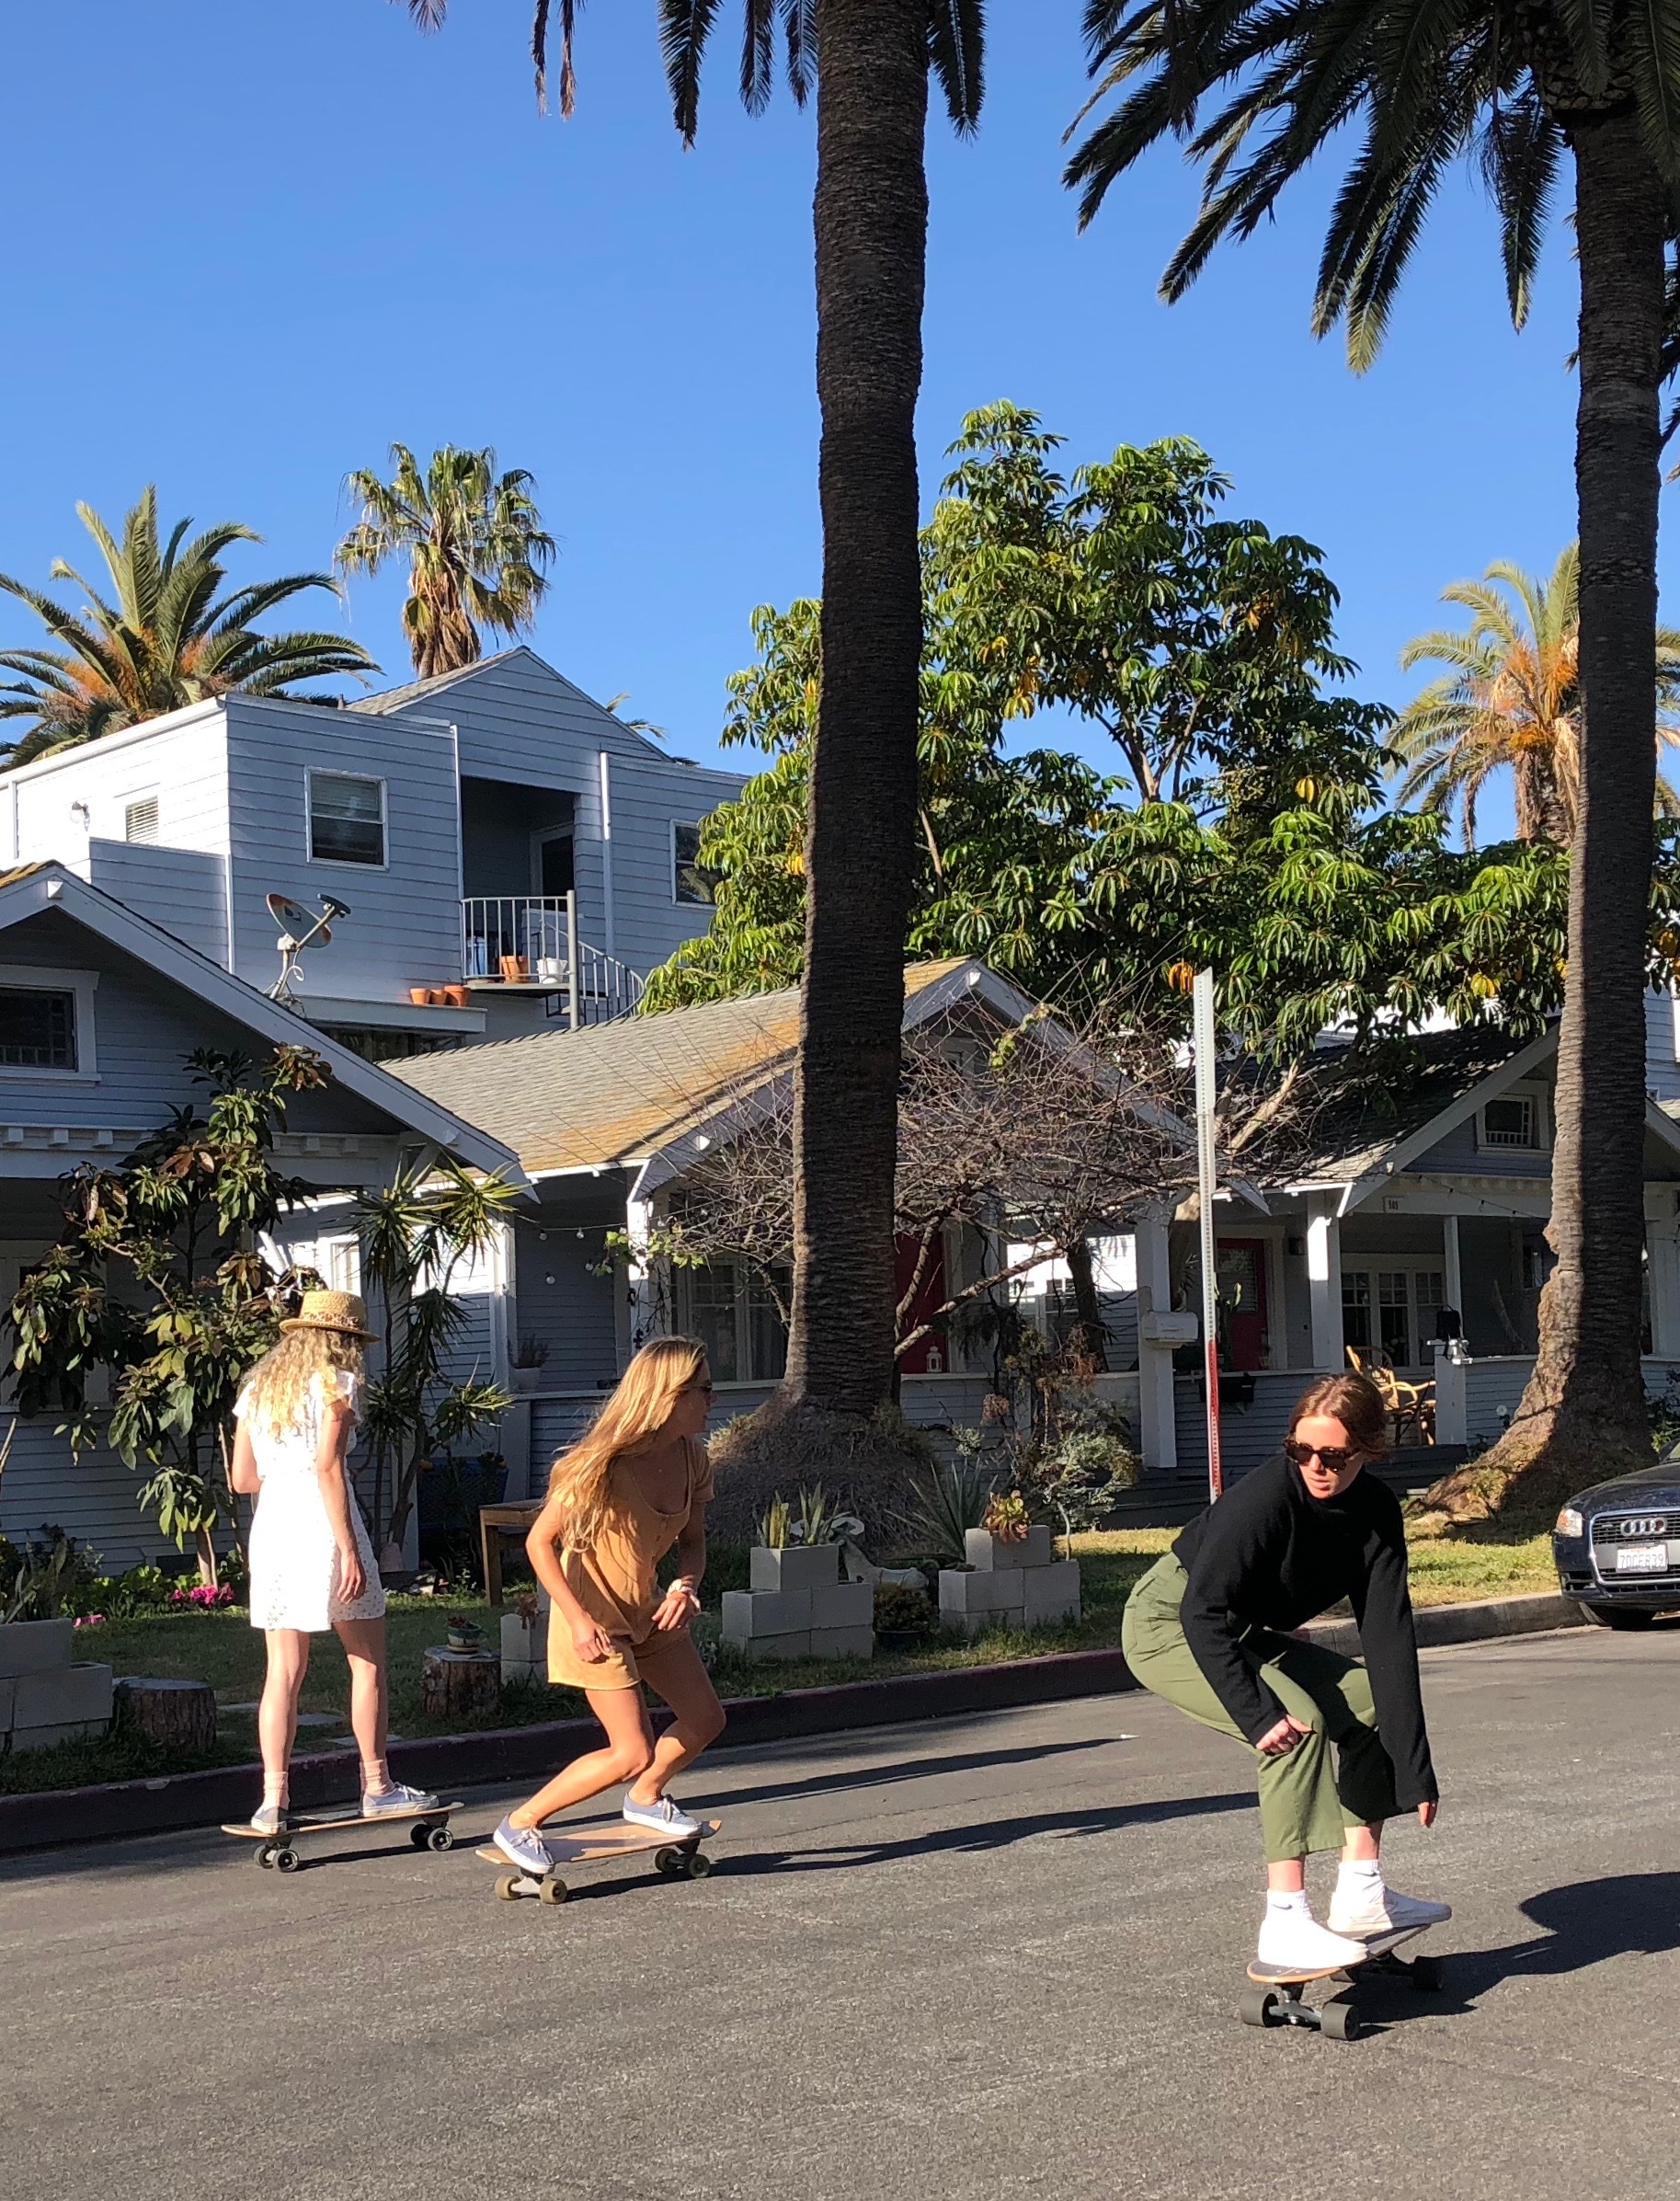 Girlswirl skateboarding down the street